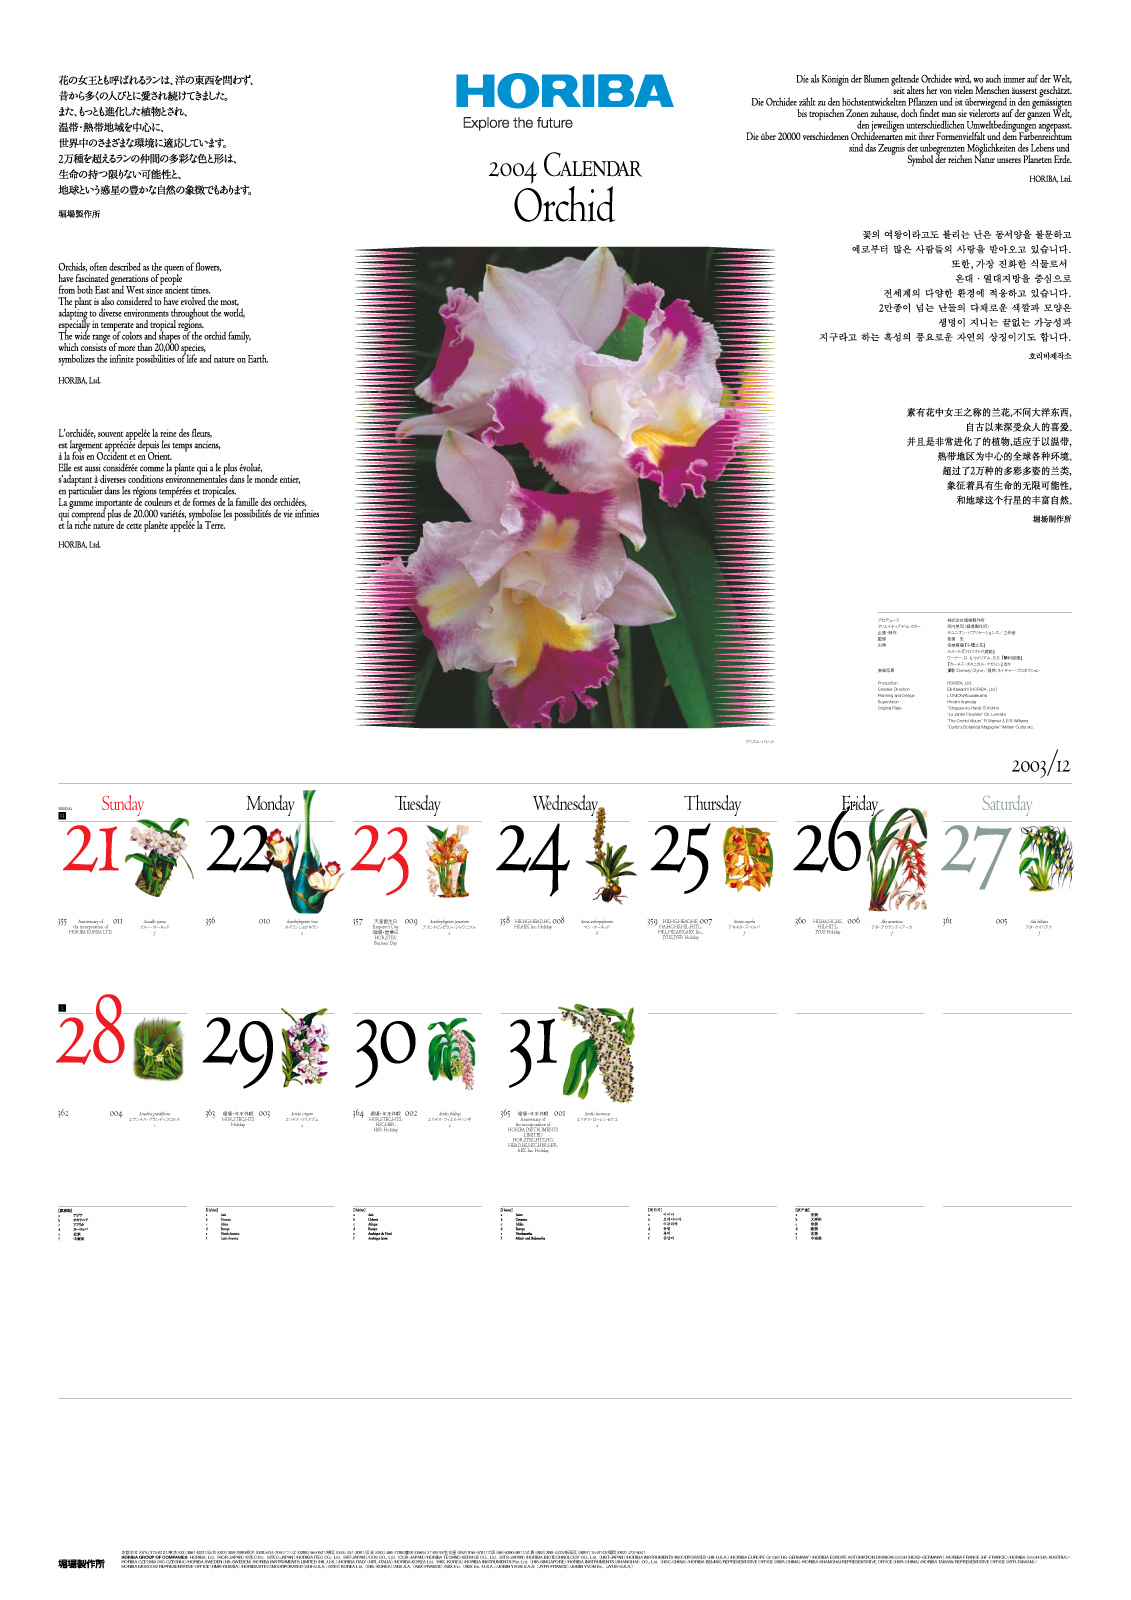 HORIBA Calendar 2004